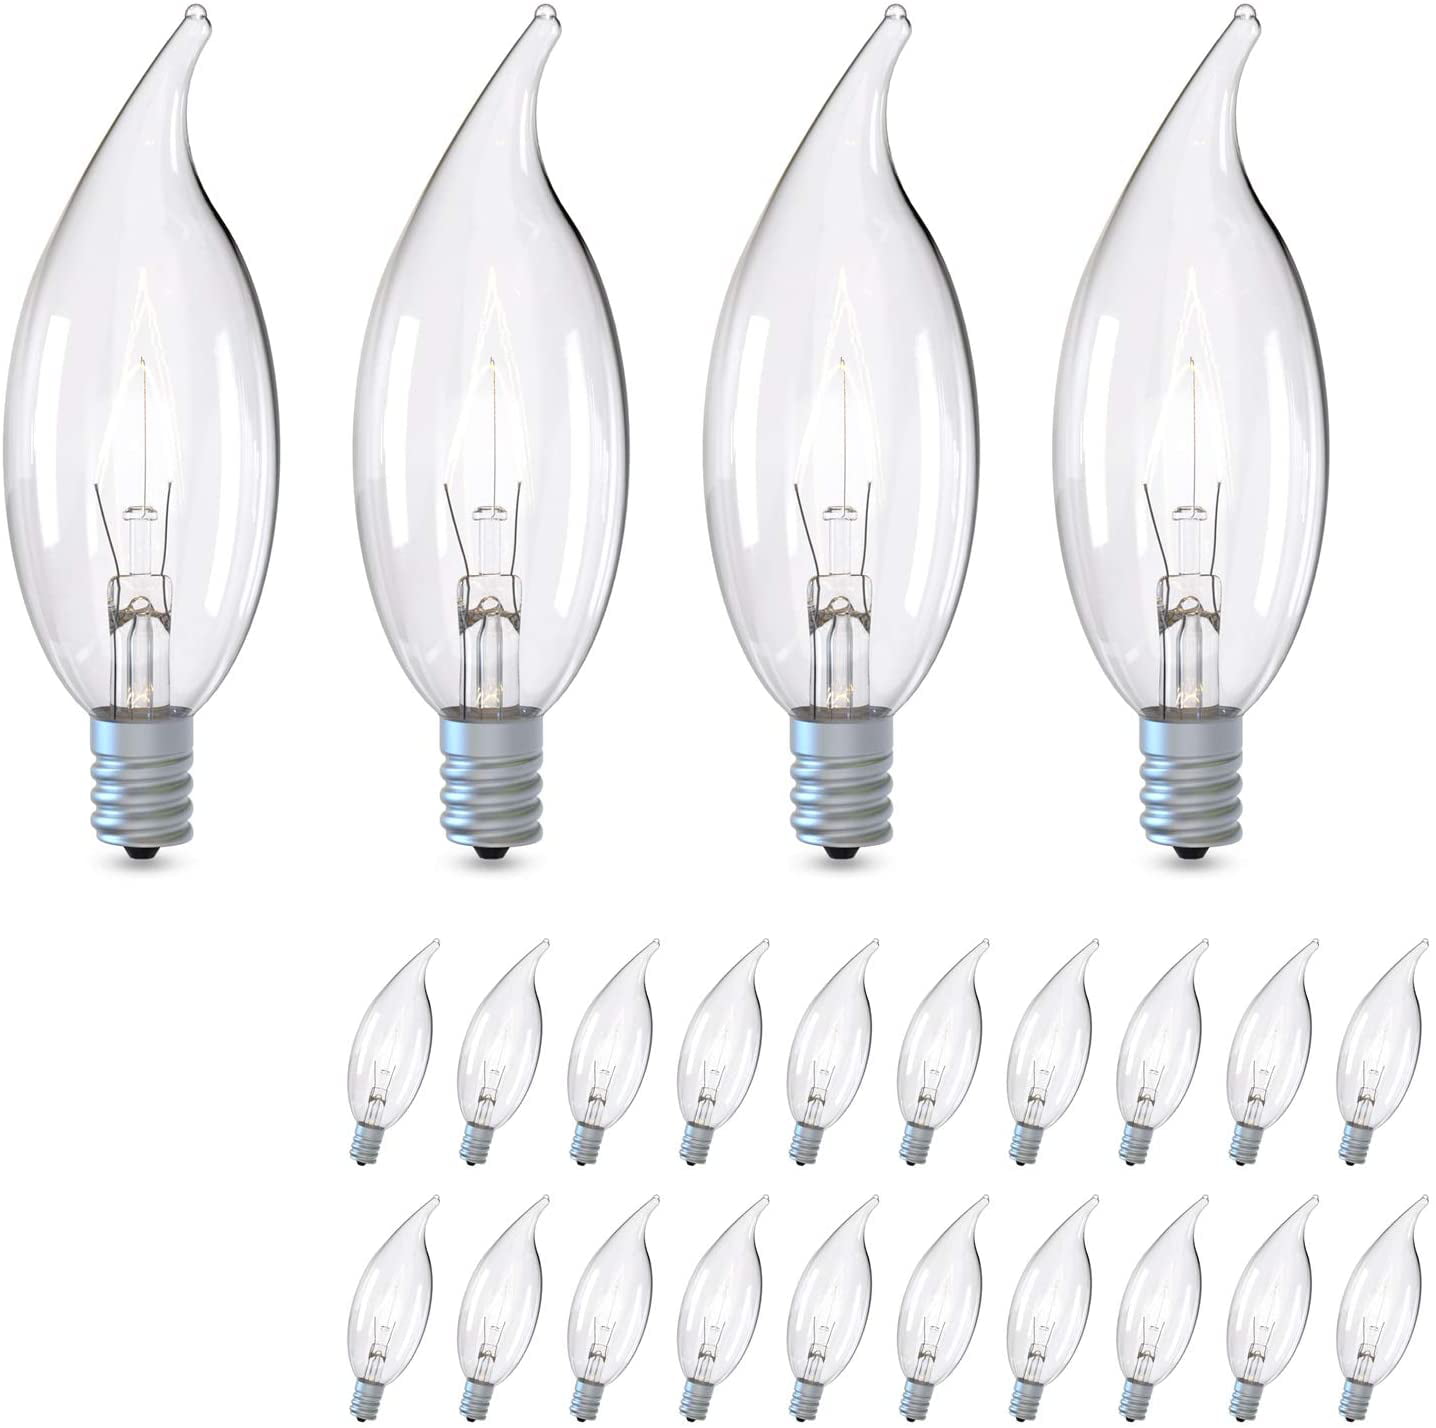 Premium Brand 10 x 40W Classic Mini Globes Clear Round Light Bulbs SES E14 